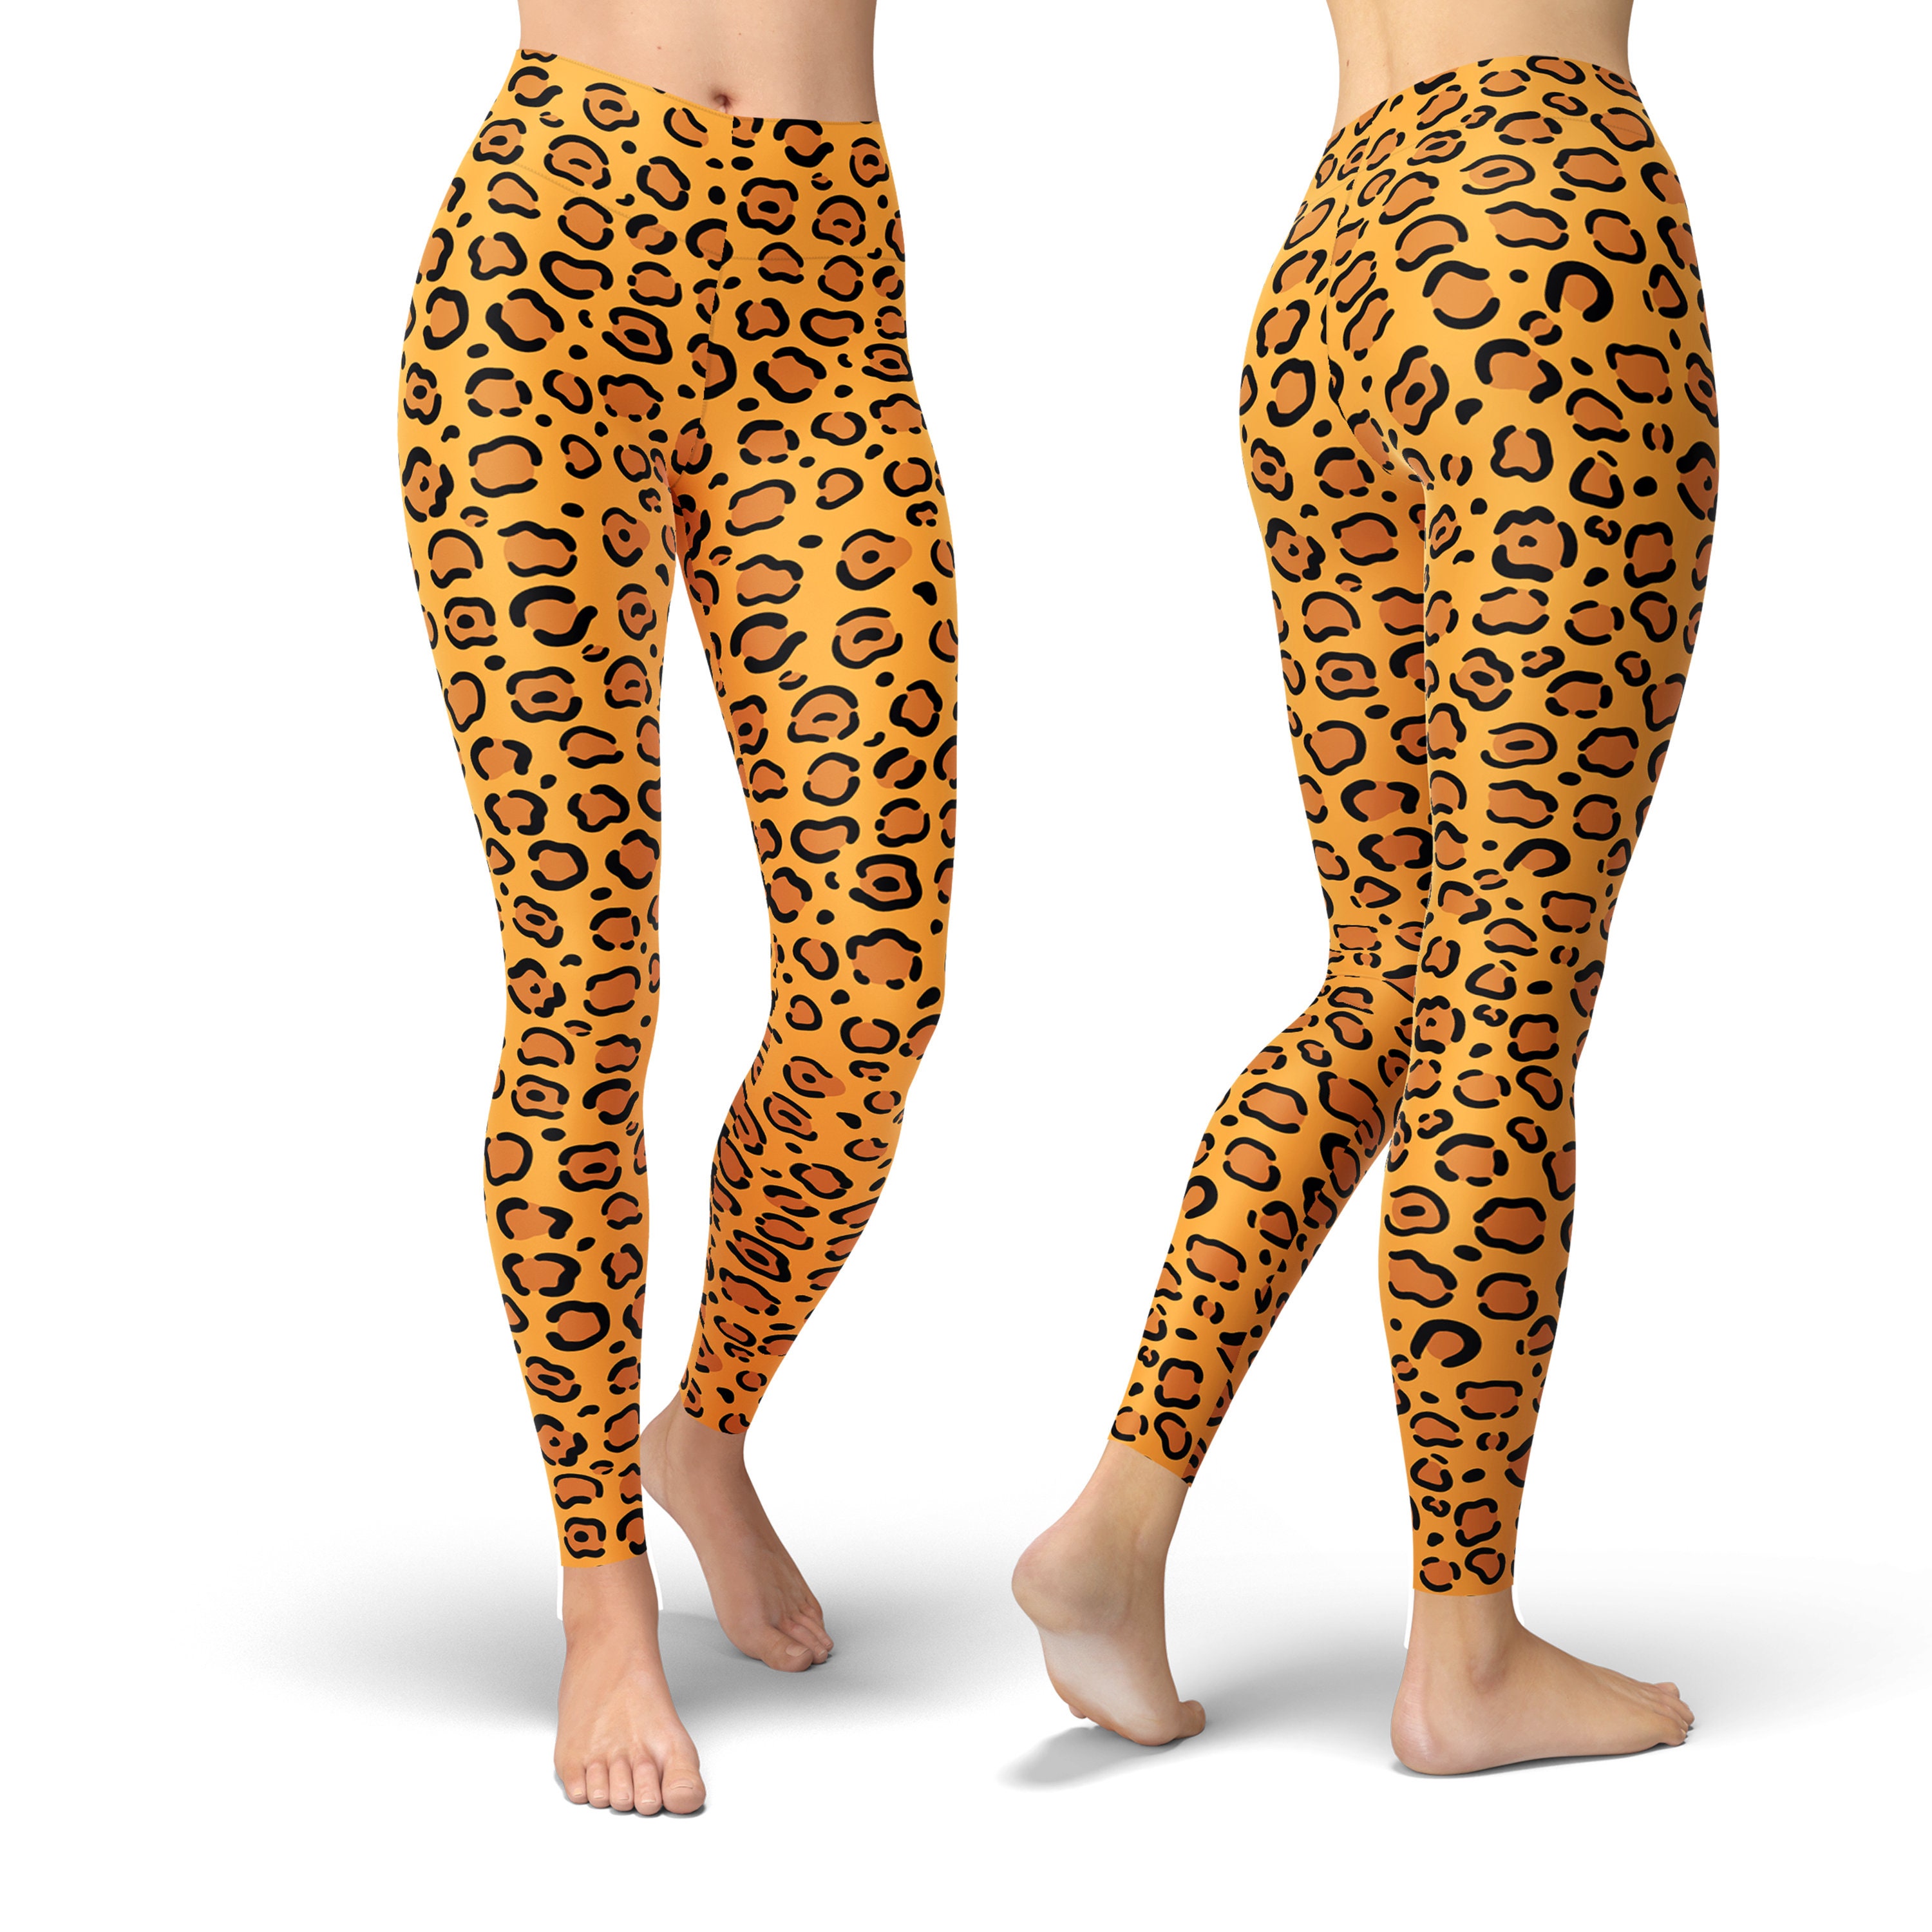 Leopard printed leggings yoga pants leopard leggings | Etsy